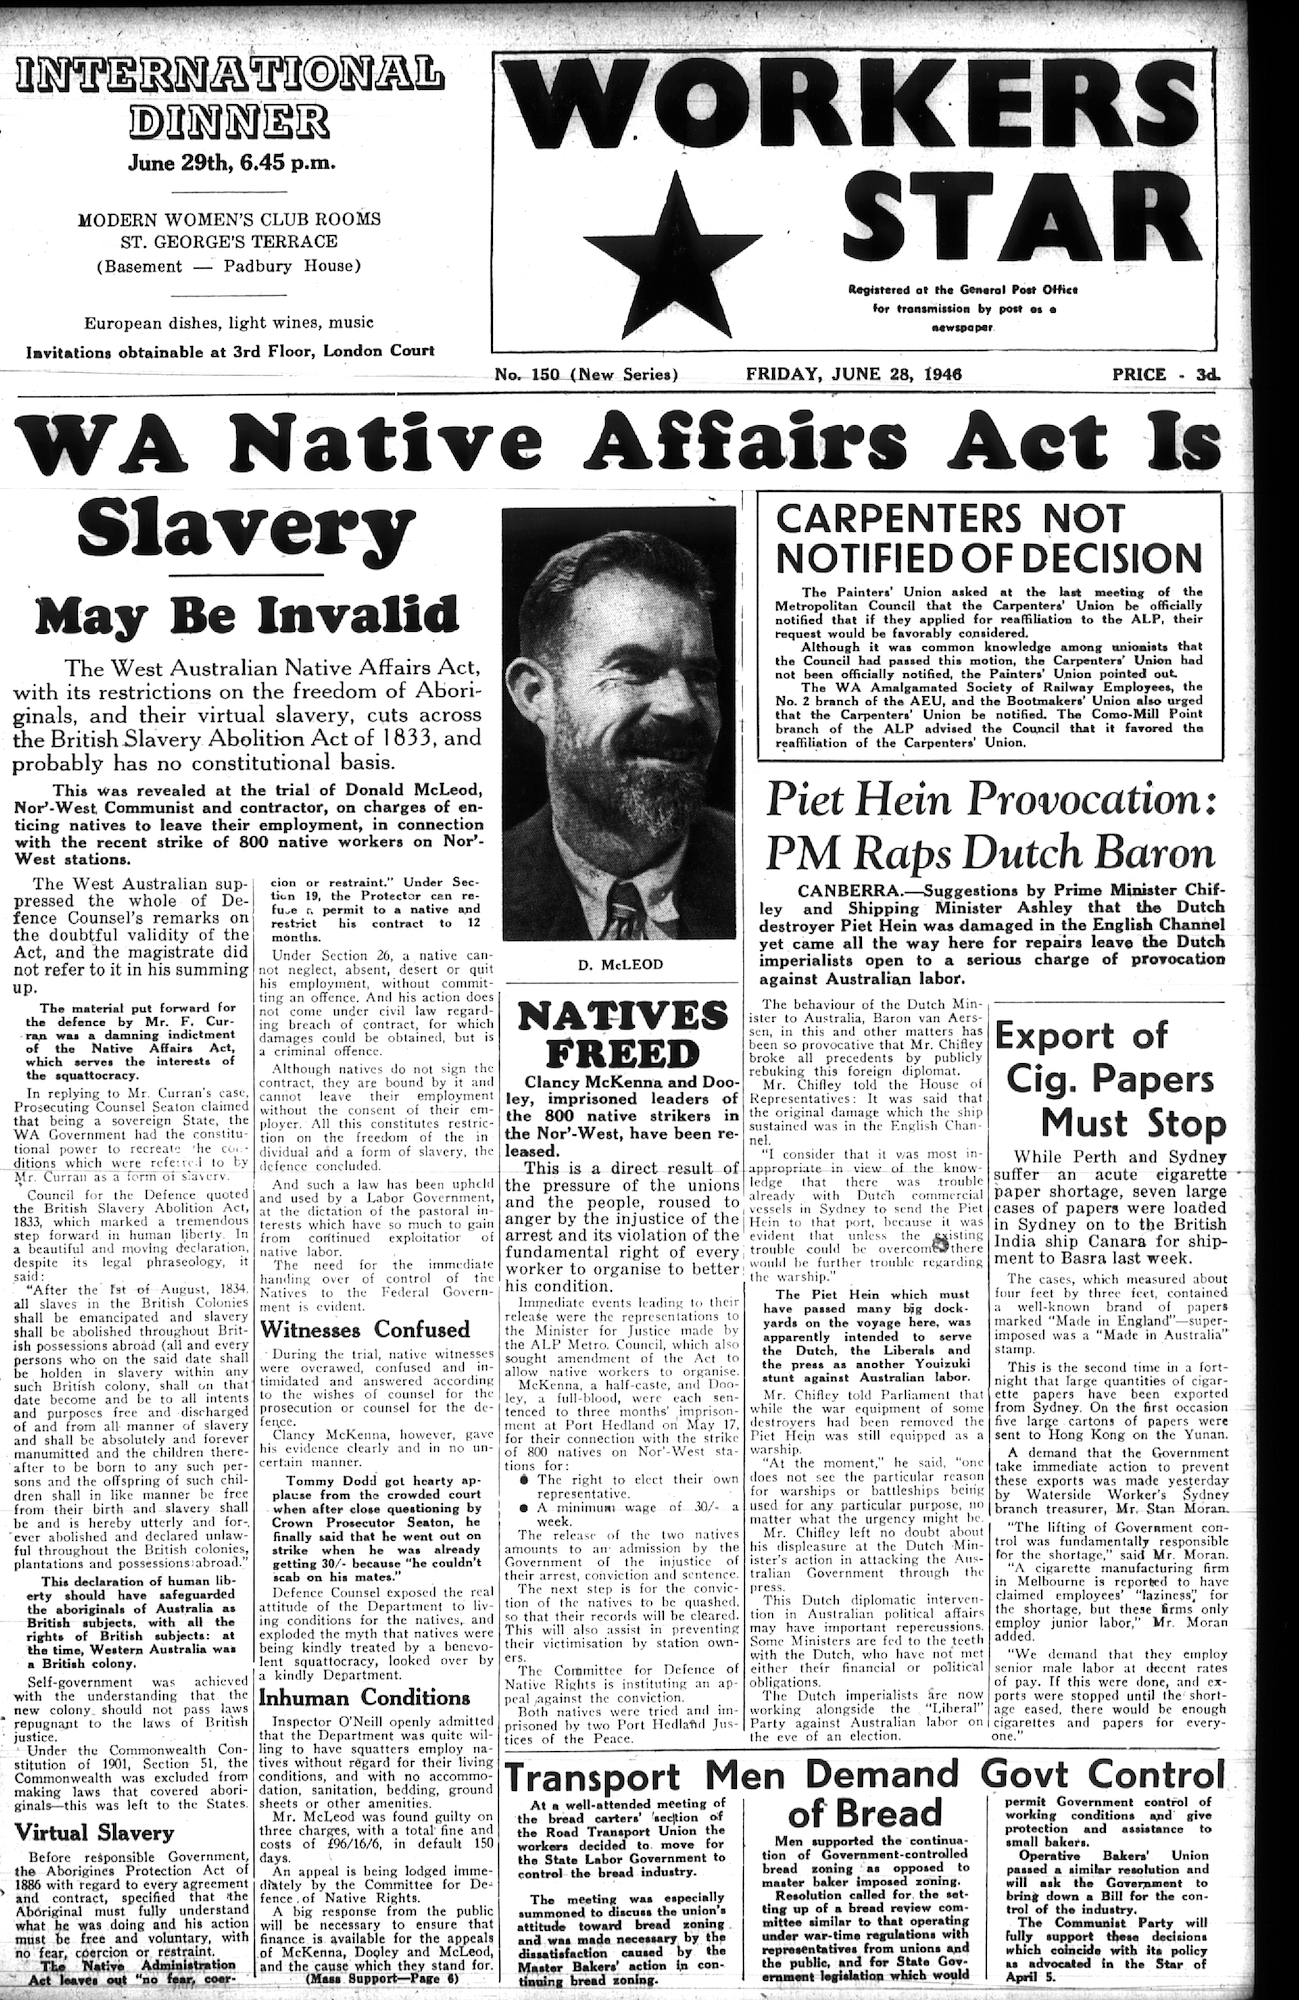 WA Native Affairs Act is Slavery newspaper article